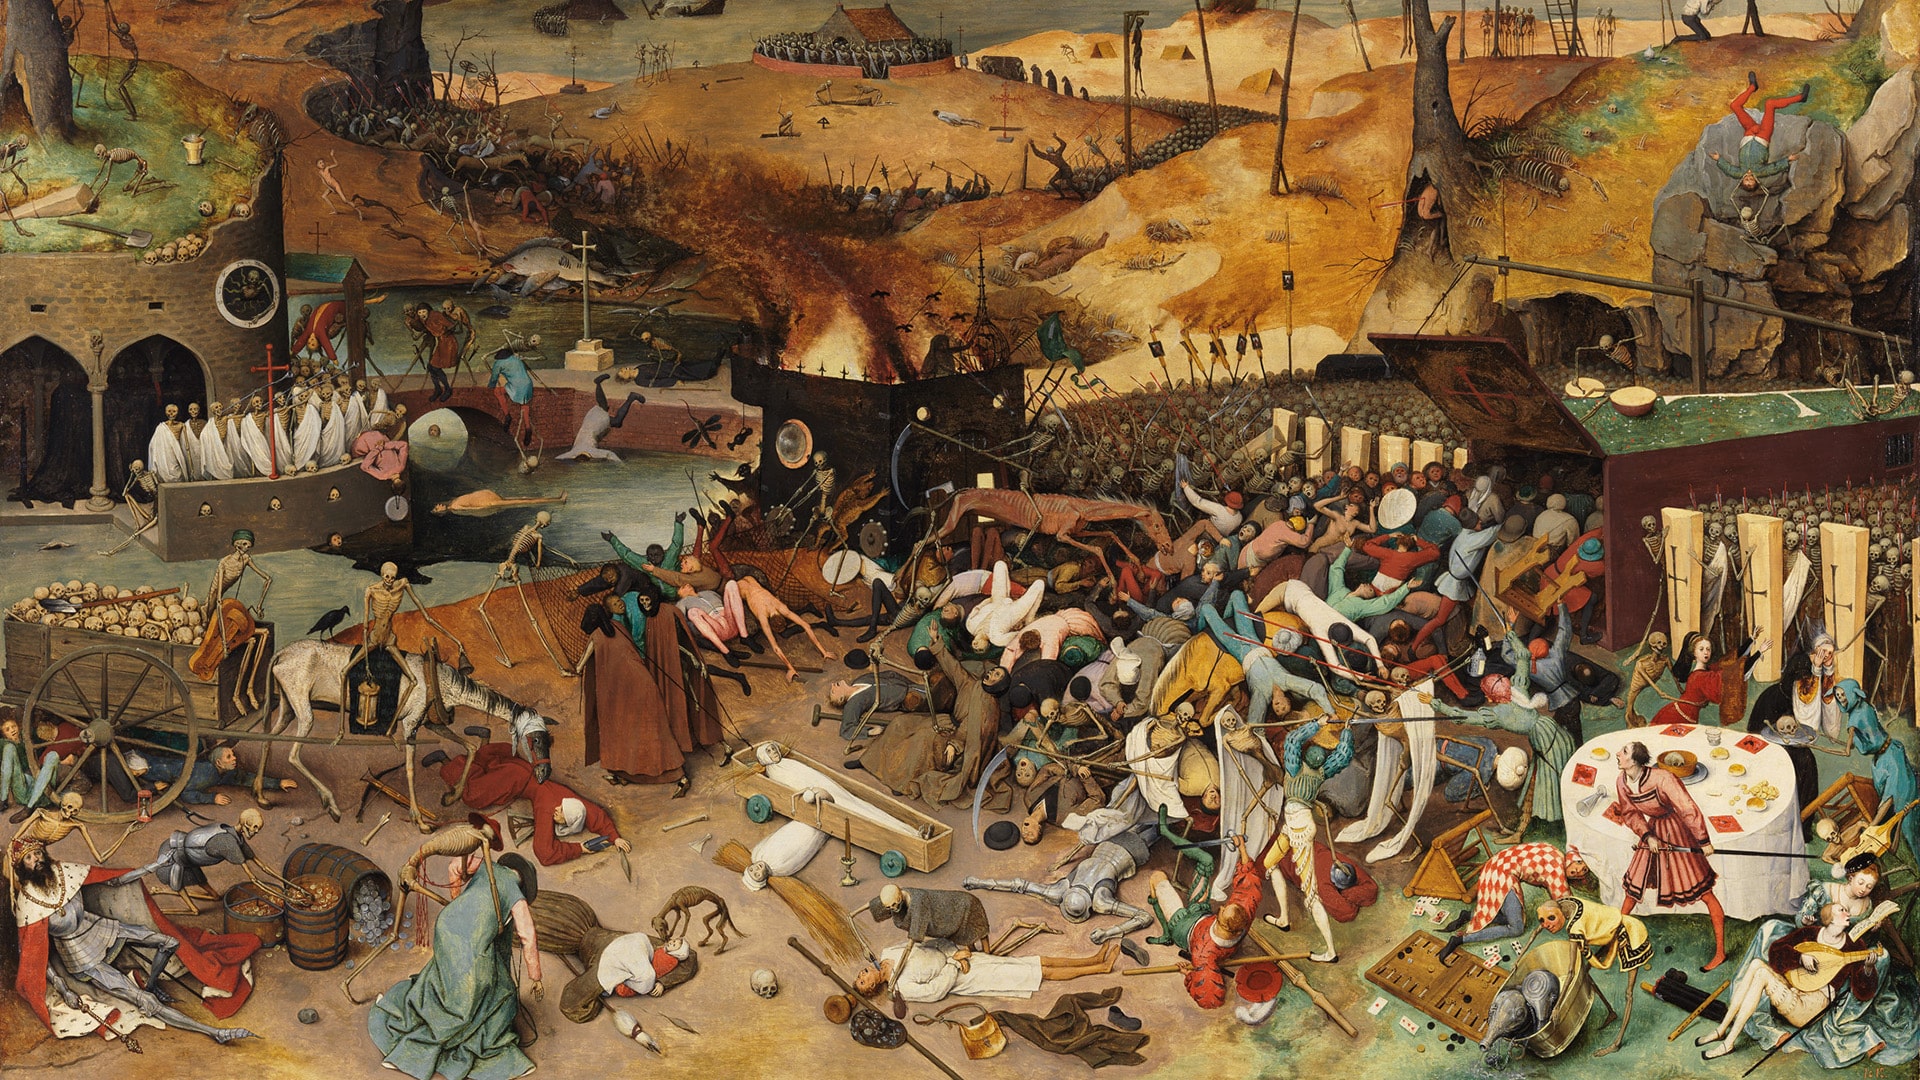 Pieter Bruegel's "The Triumph of Death"